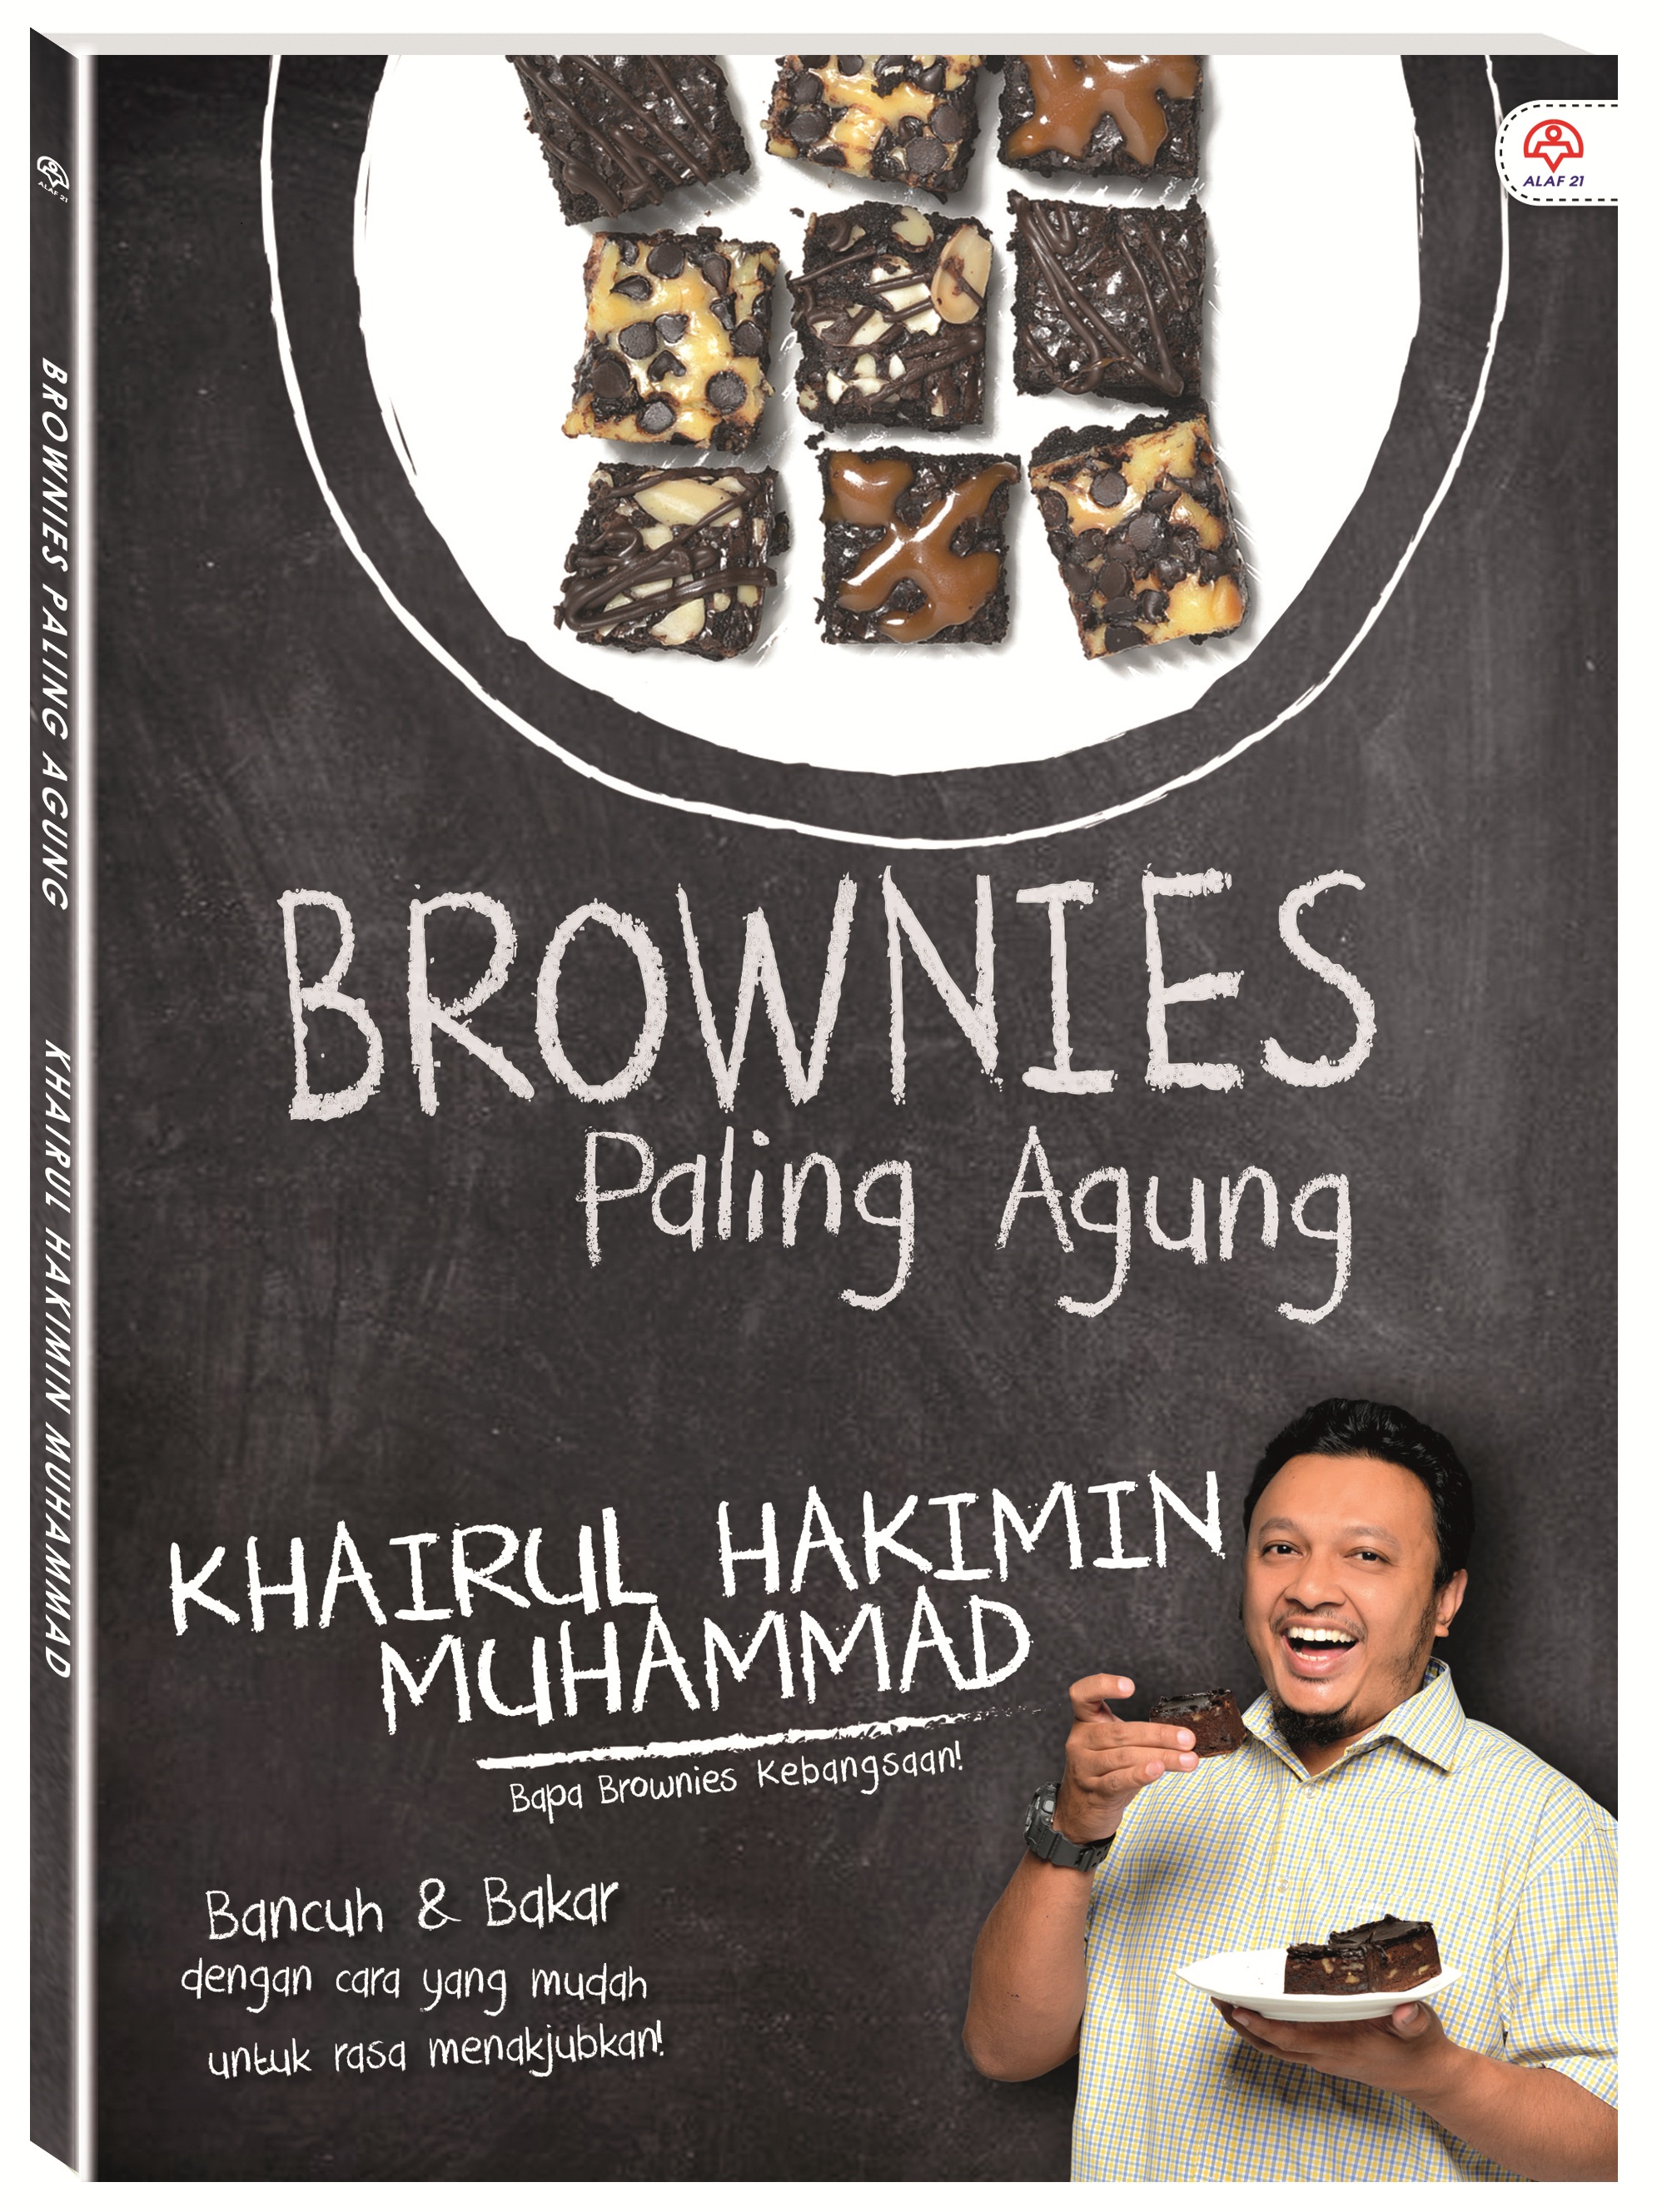 Brownies Paling Agung